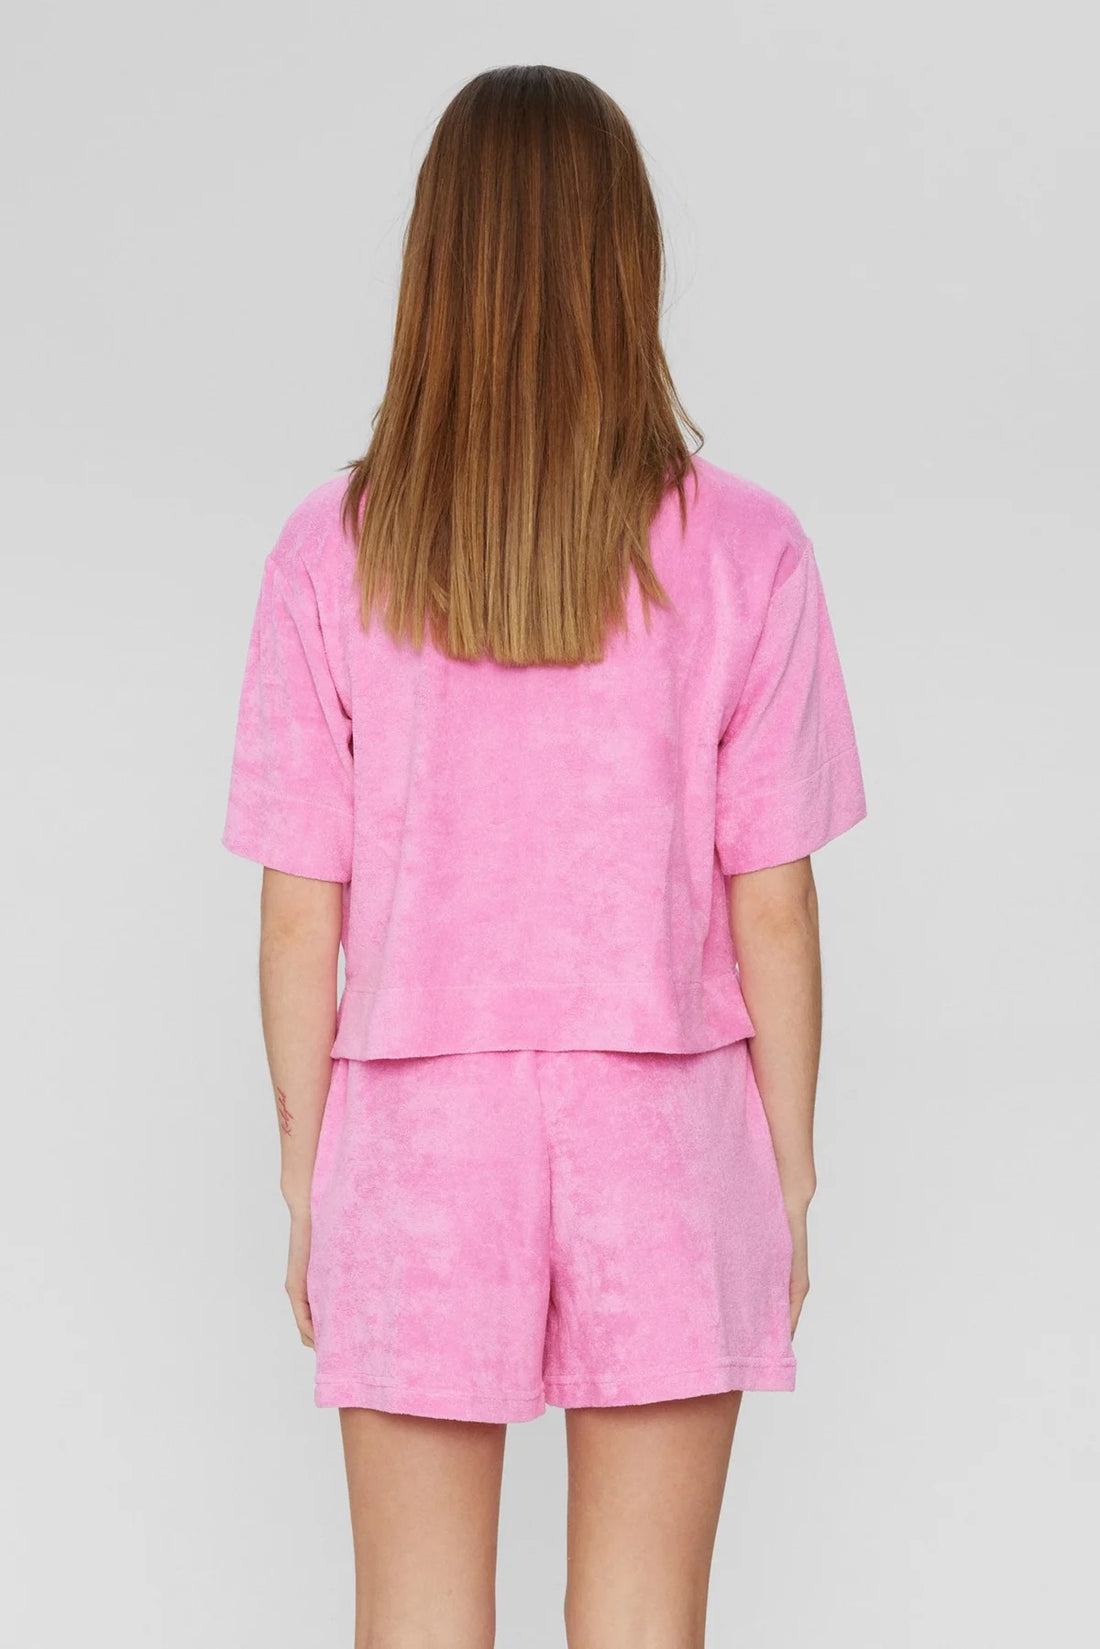 Nümph Nufrotte Button Up Shirt Top in Fuchsia Pink